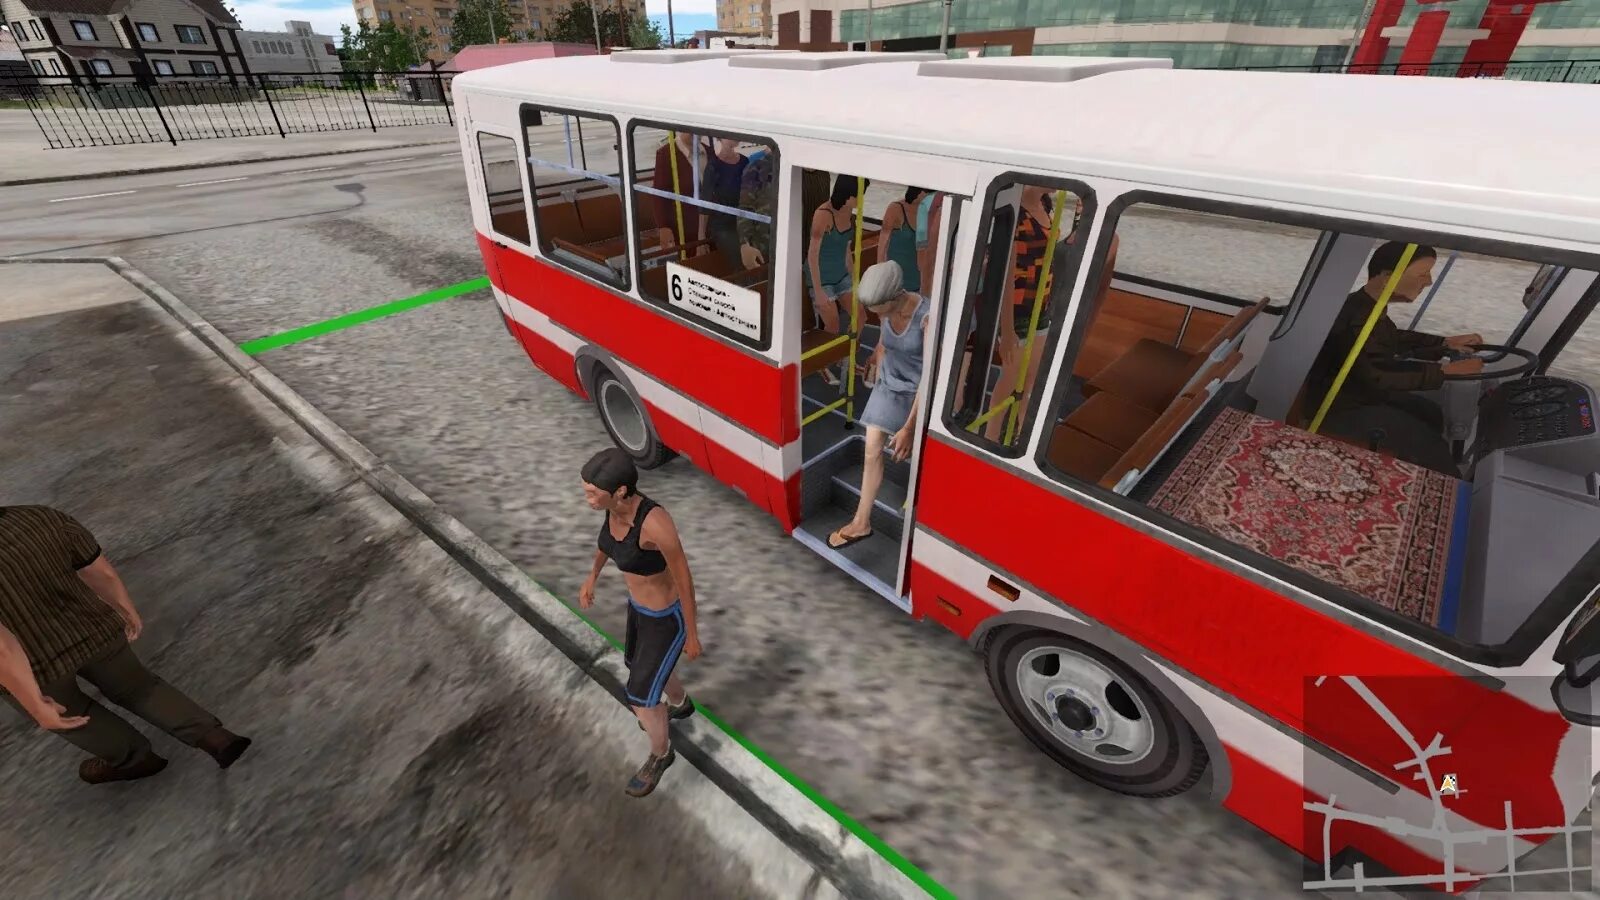 Bus Driver Simulator 2019 ПАЗ. Bus Driver Simulator 2018 пазик. Bus Driver Simulator 2019 ЛИАЗ 5292. Bus Driver Simulator 2019 ЛИАЗ 677. Видео игры на автобусе